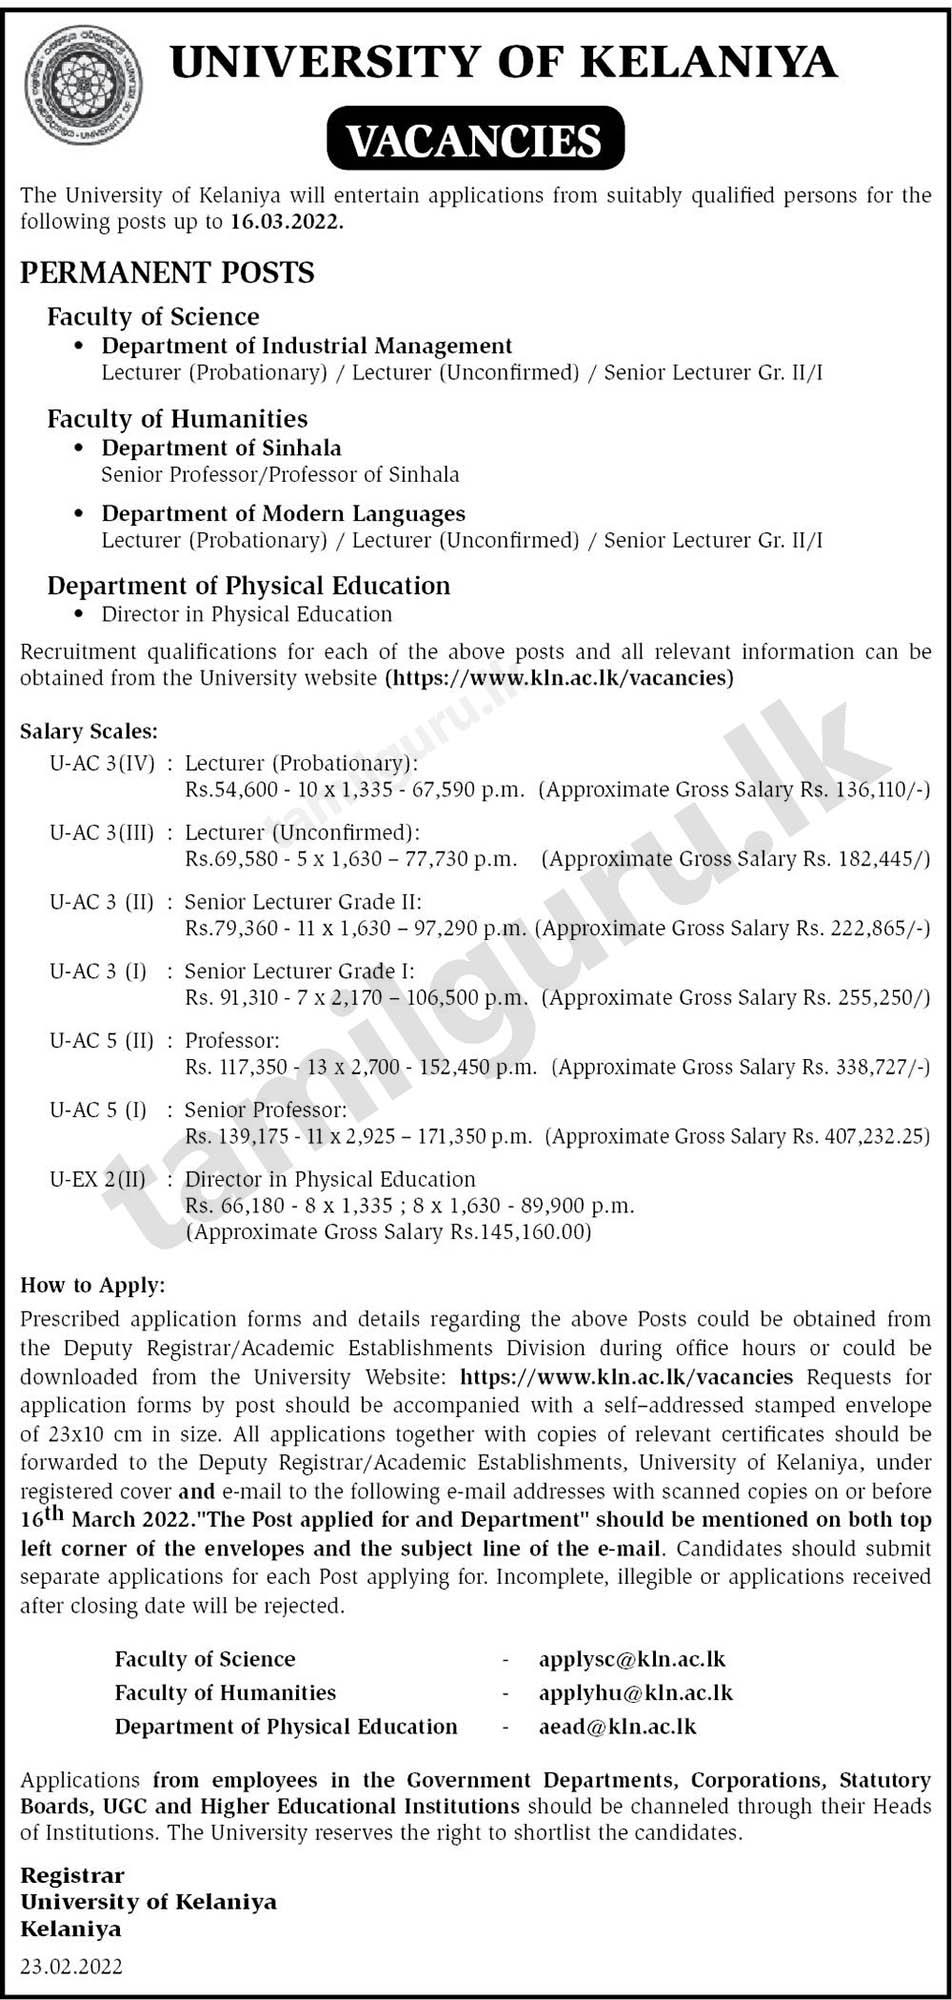 University of Kelaniya Vacancies 2022-02-25 (Lecturer (Probationary / Unconfirmed), Senior Lecturer, Professor, Senior Professor, Director in Physical Education) - Notice in English